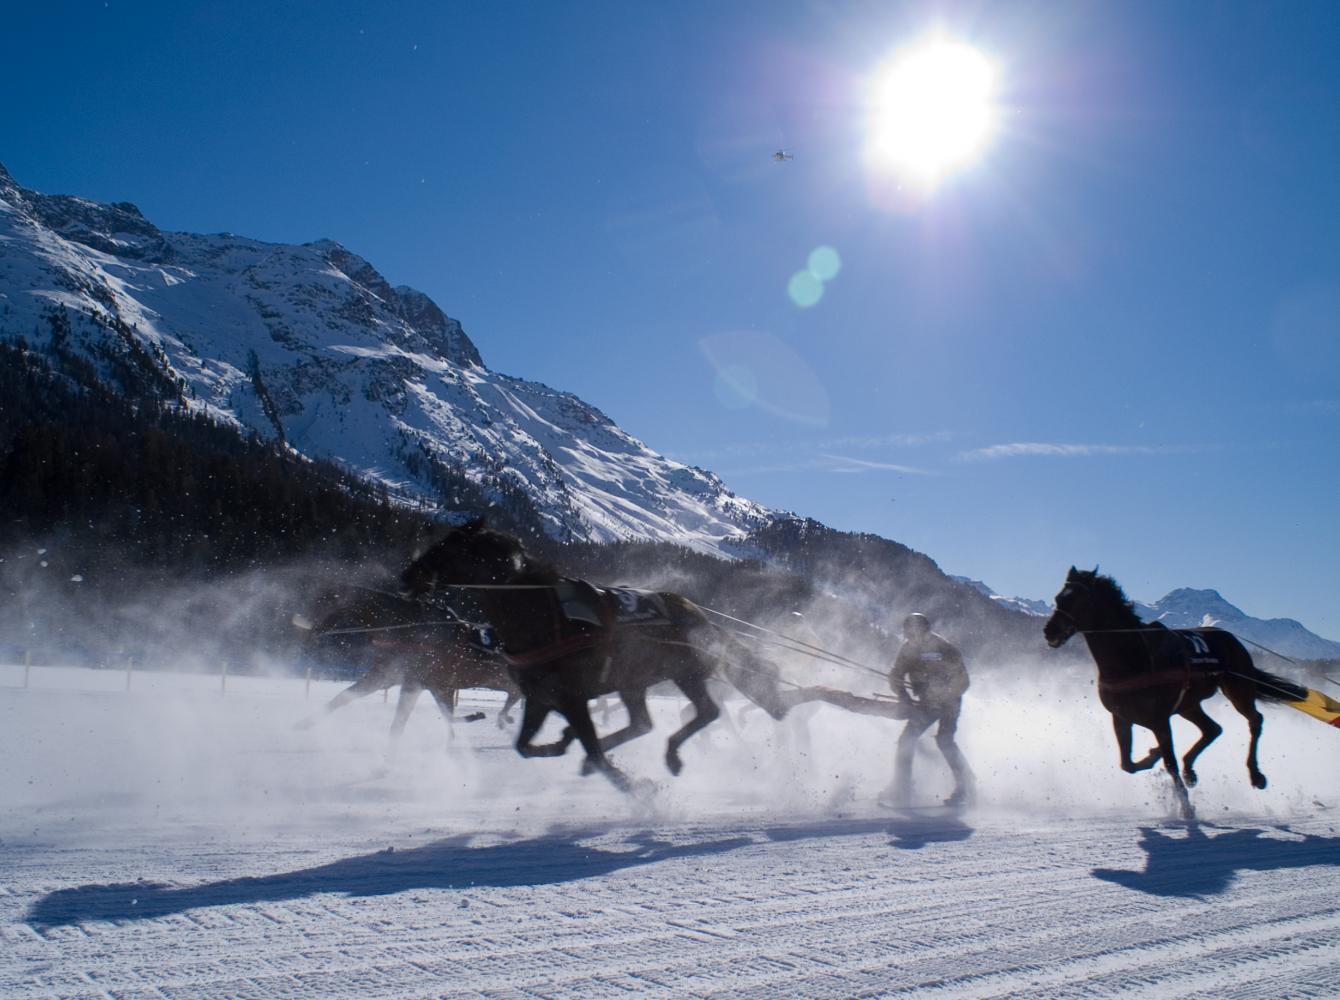 Racing on ice on a Swiss lake